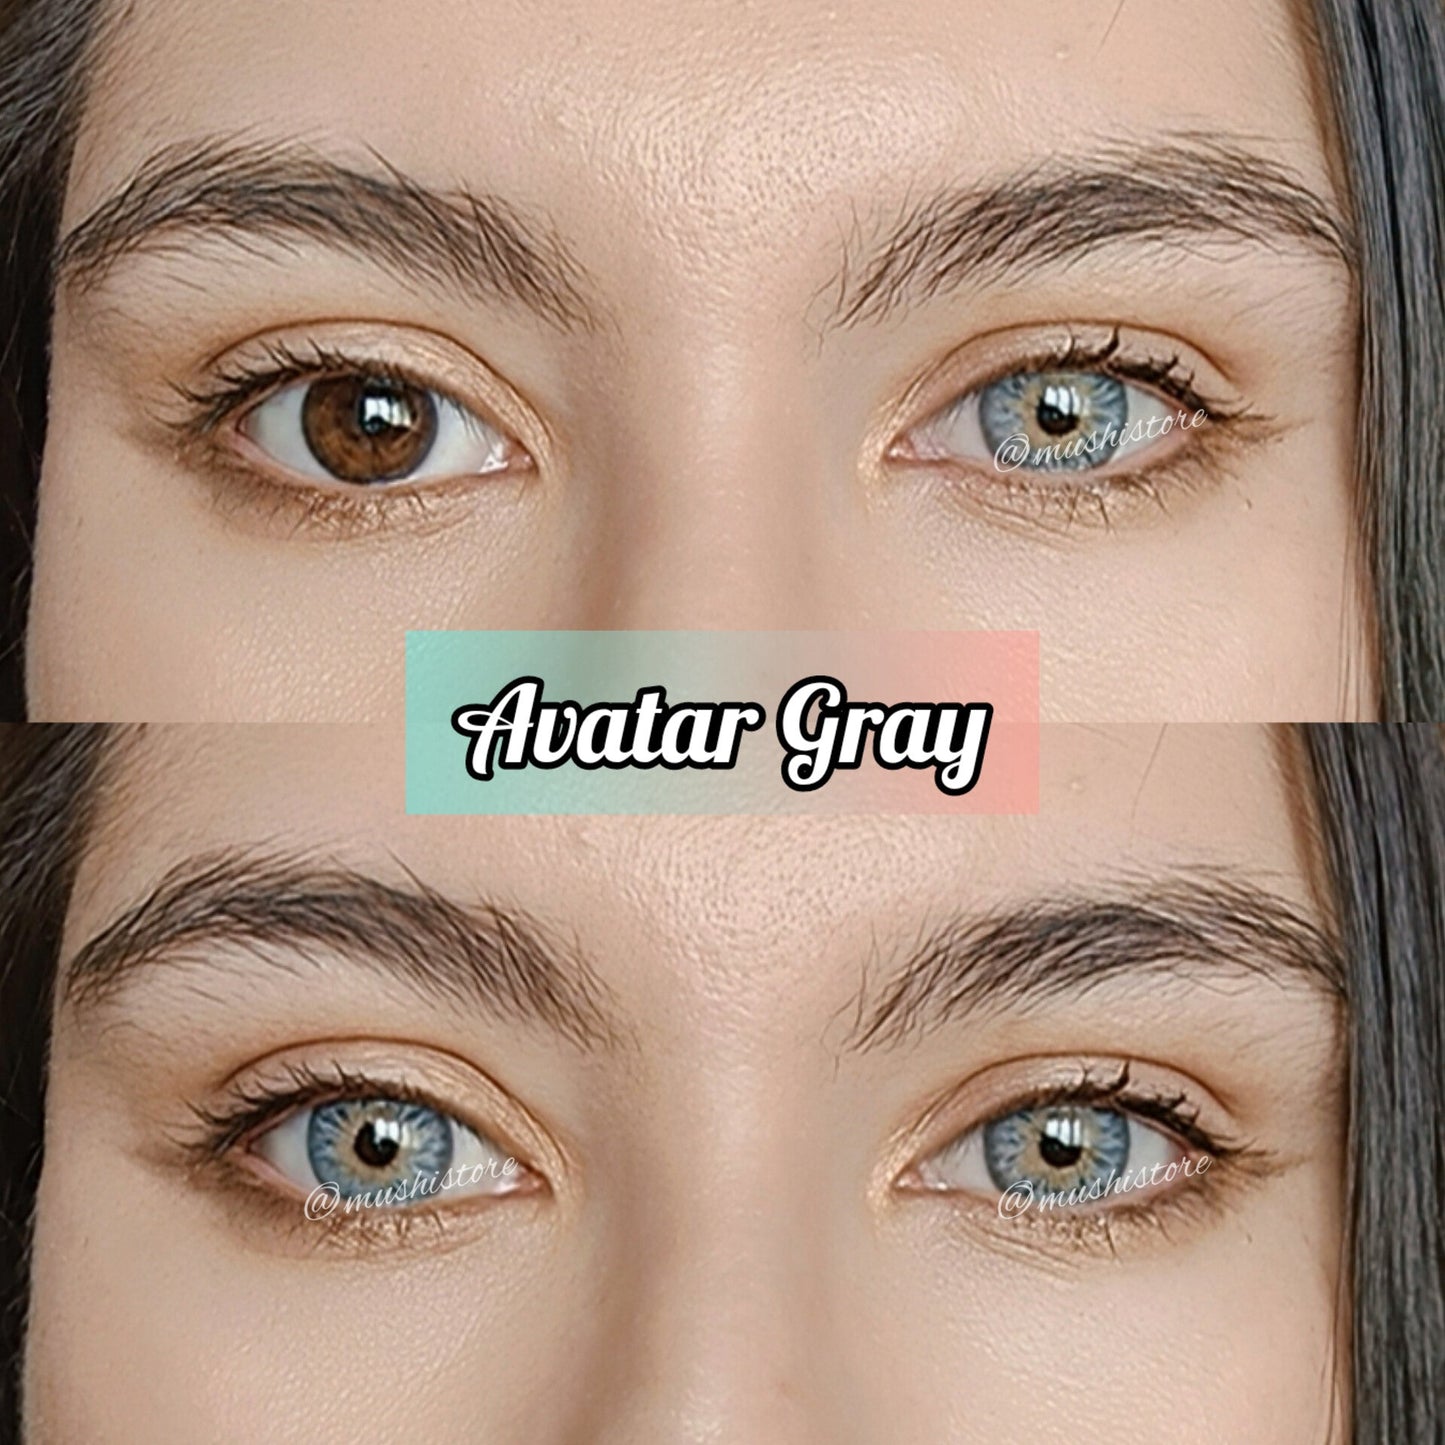 Avatar Gray